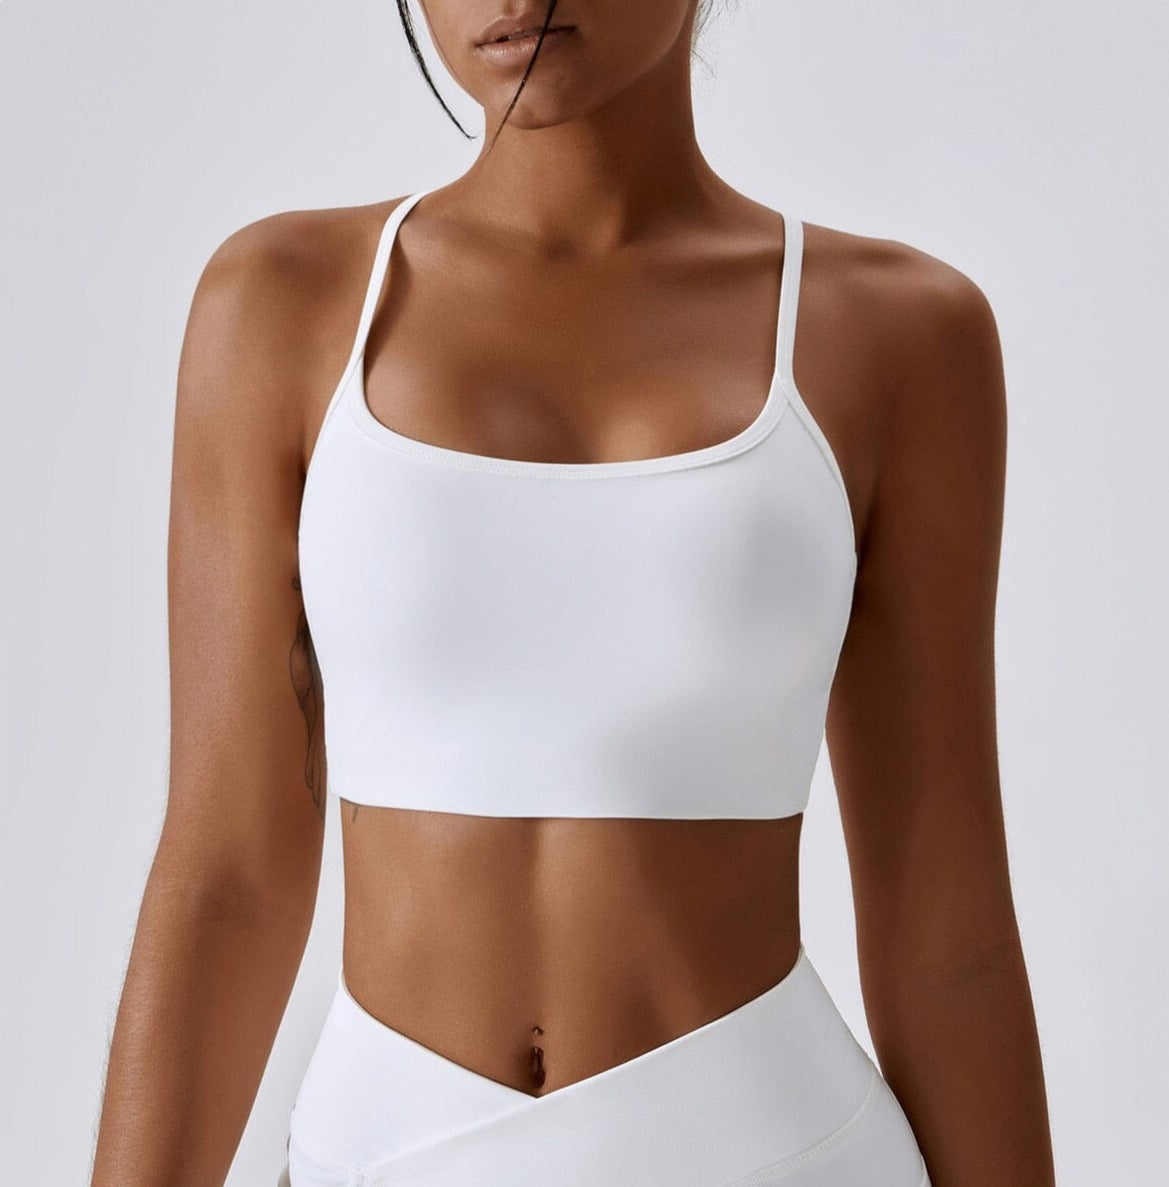 Baseline White Sports bra Size XXL New with tags, criss cross back